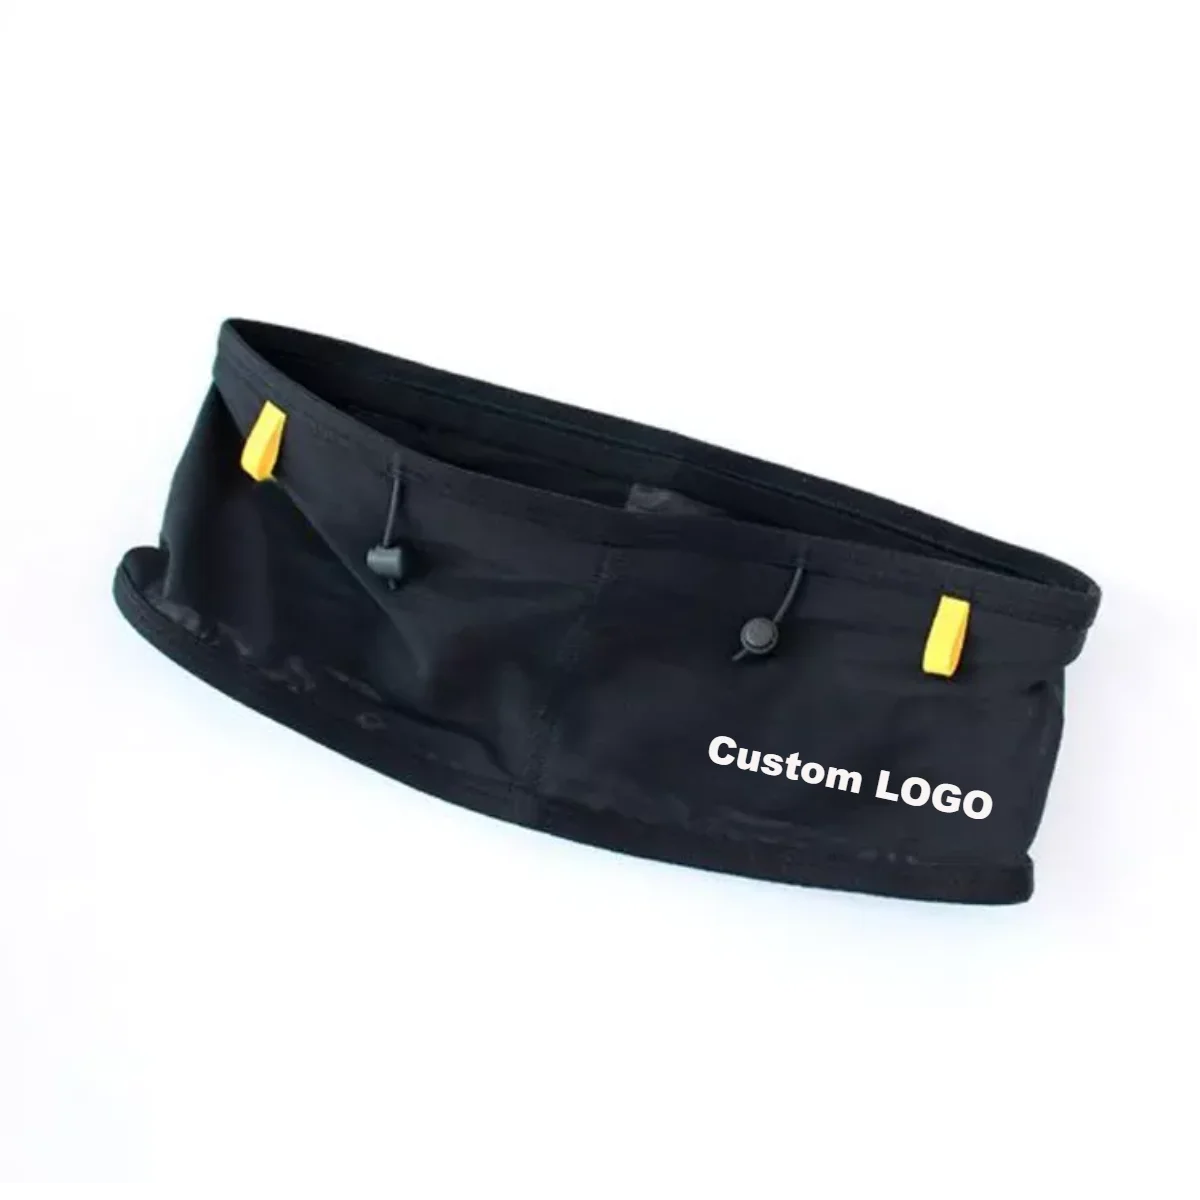 NEW Adjustable Waist Running Jogging Belt Bag Gym Pouch Phone Holder 